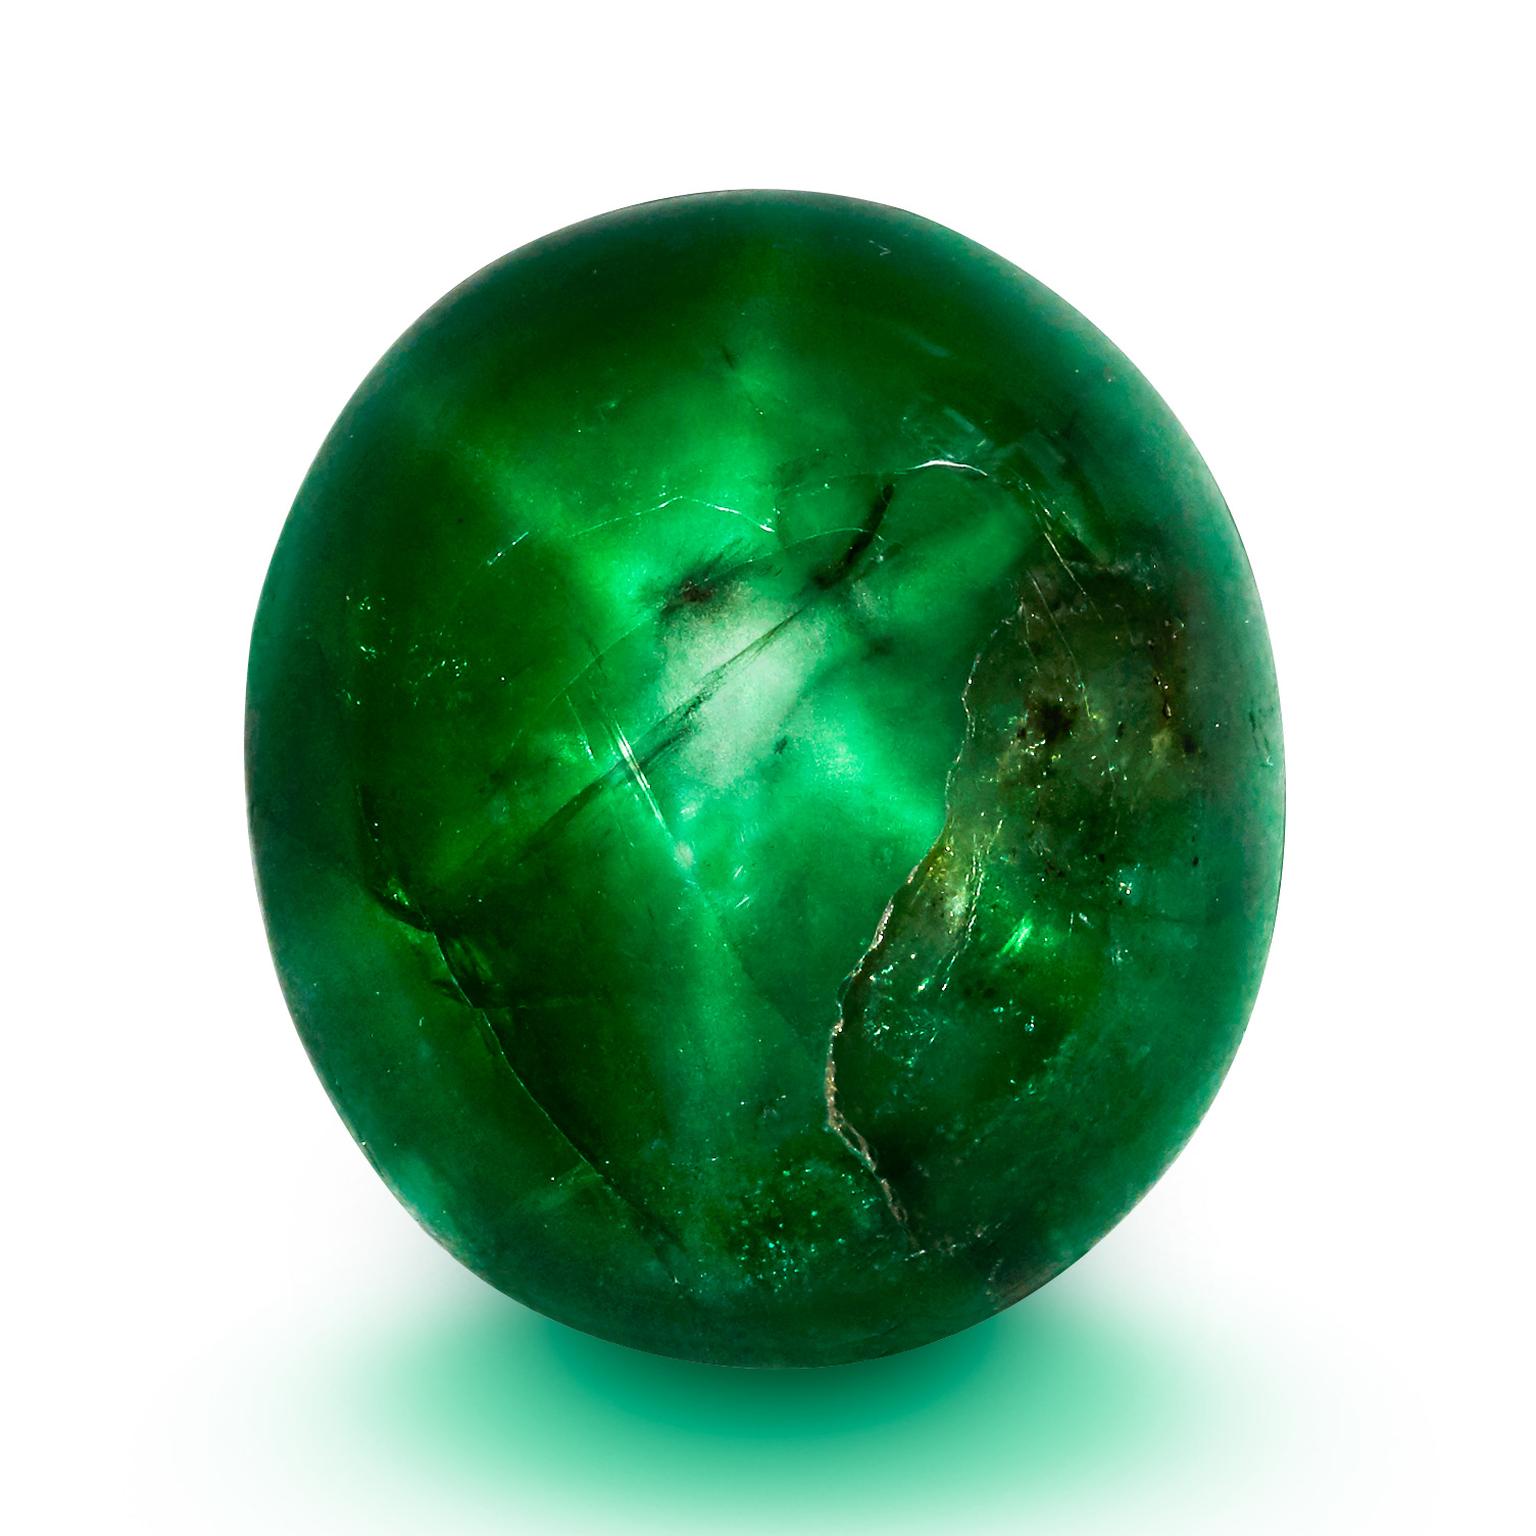 The Marcial de Gomar Star emerald